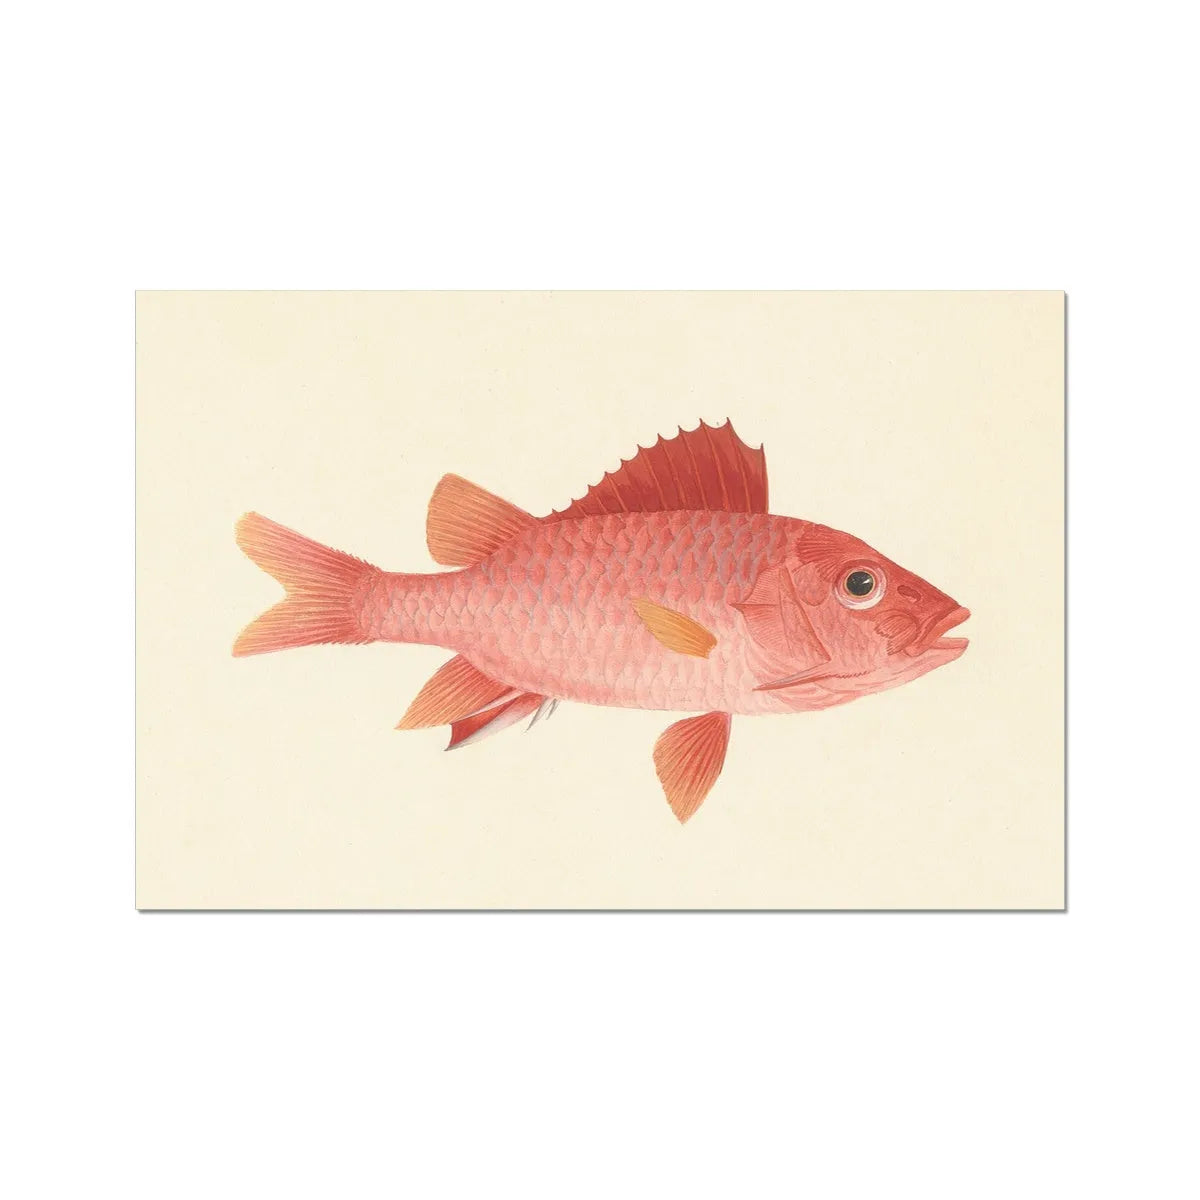 This Fish - Luigi Balugani Fine Art Print - 24’x16’ - Posters Prints & Visual Artwork - Aesthetic Art